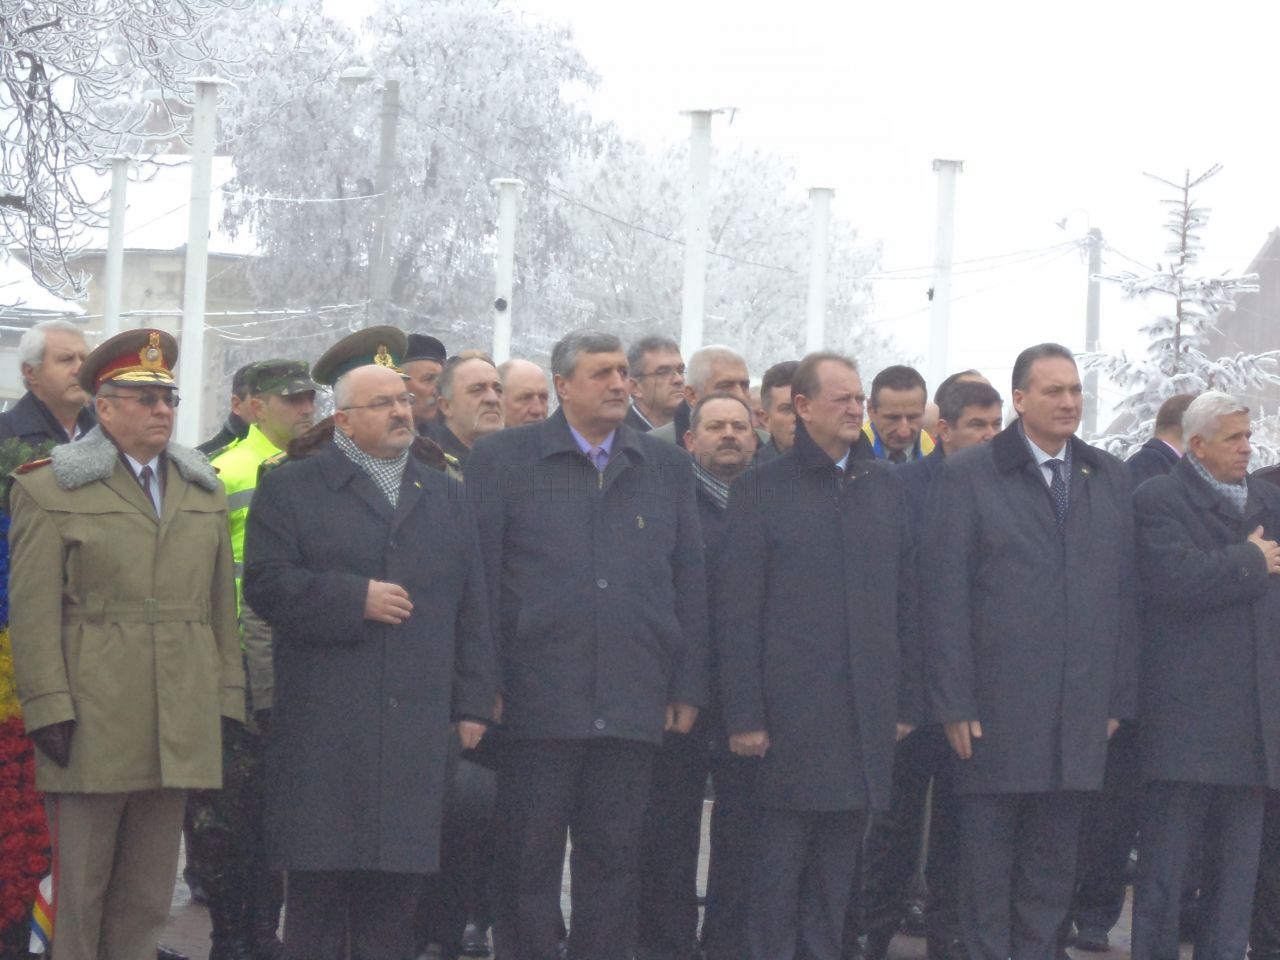 Eroii revoluției au fost comemorați la Turda